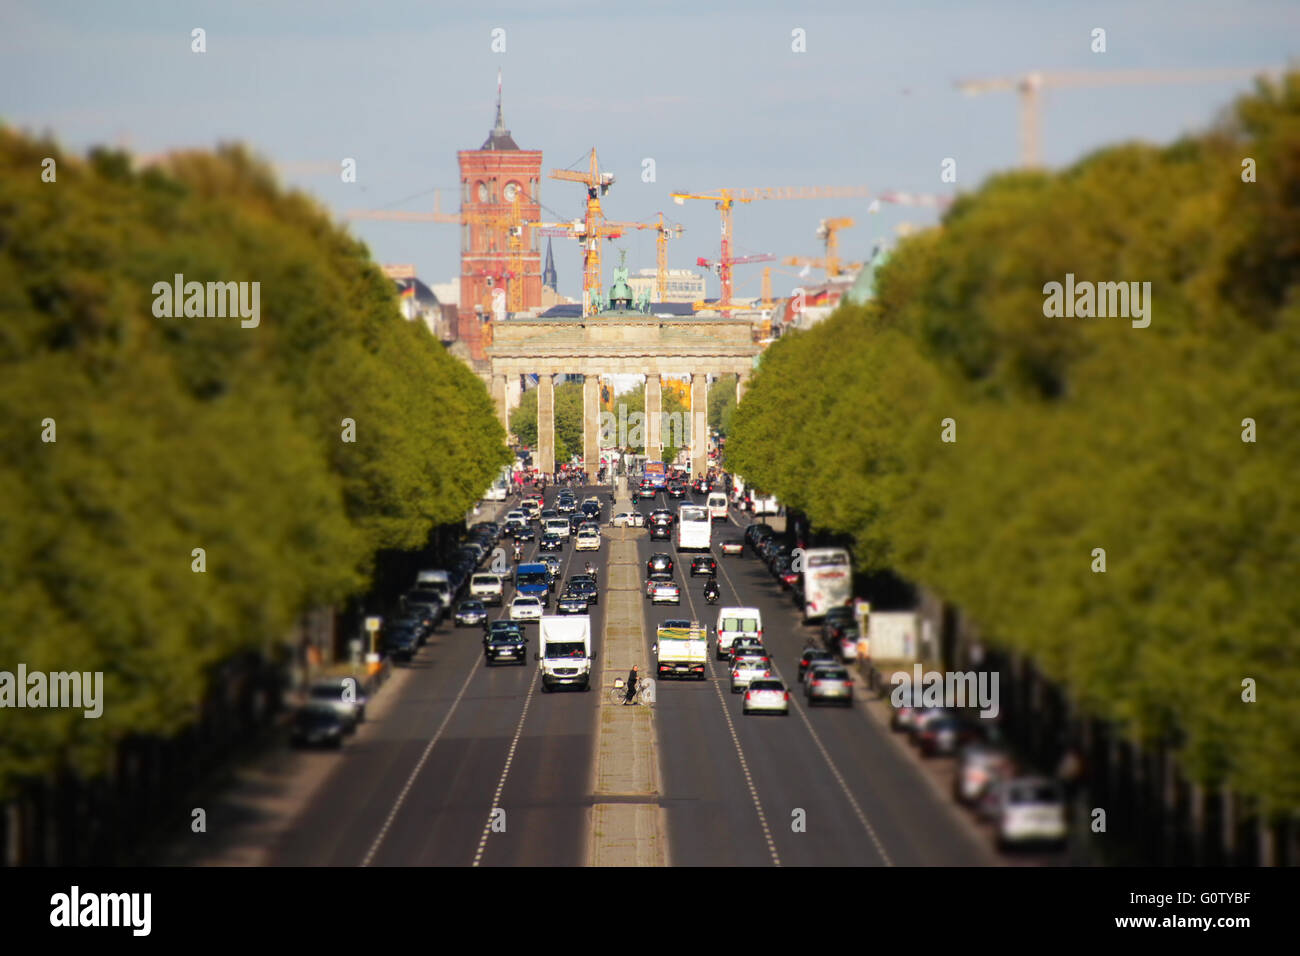 Berlin city skyline - brandenburg gate and red town hall - tilt shift Stock Photo